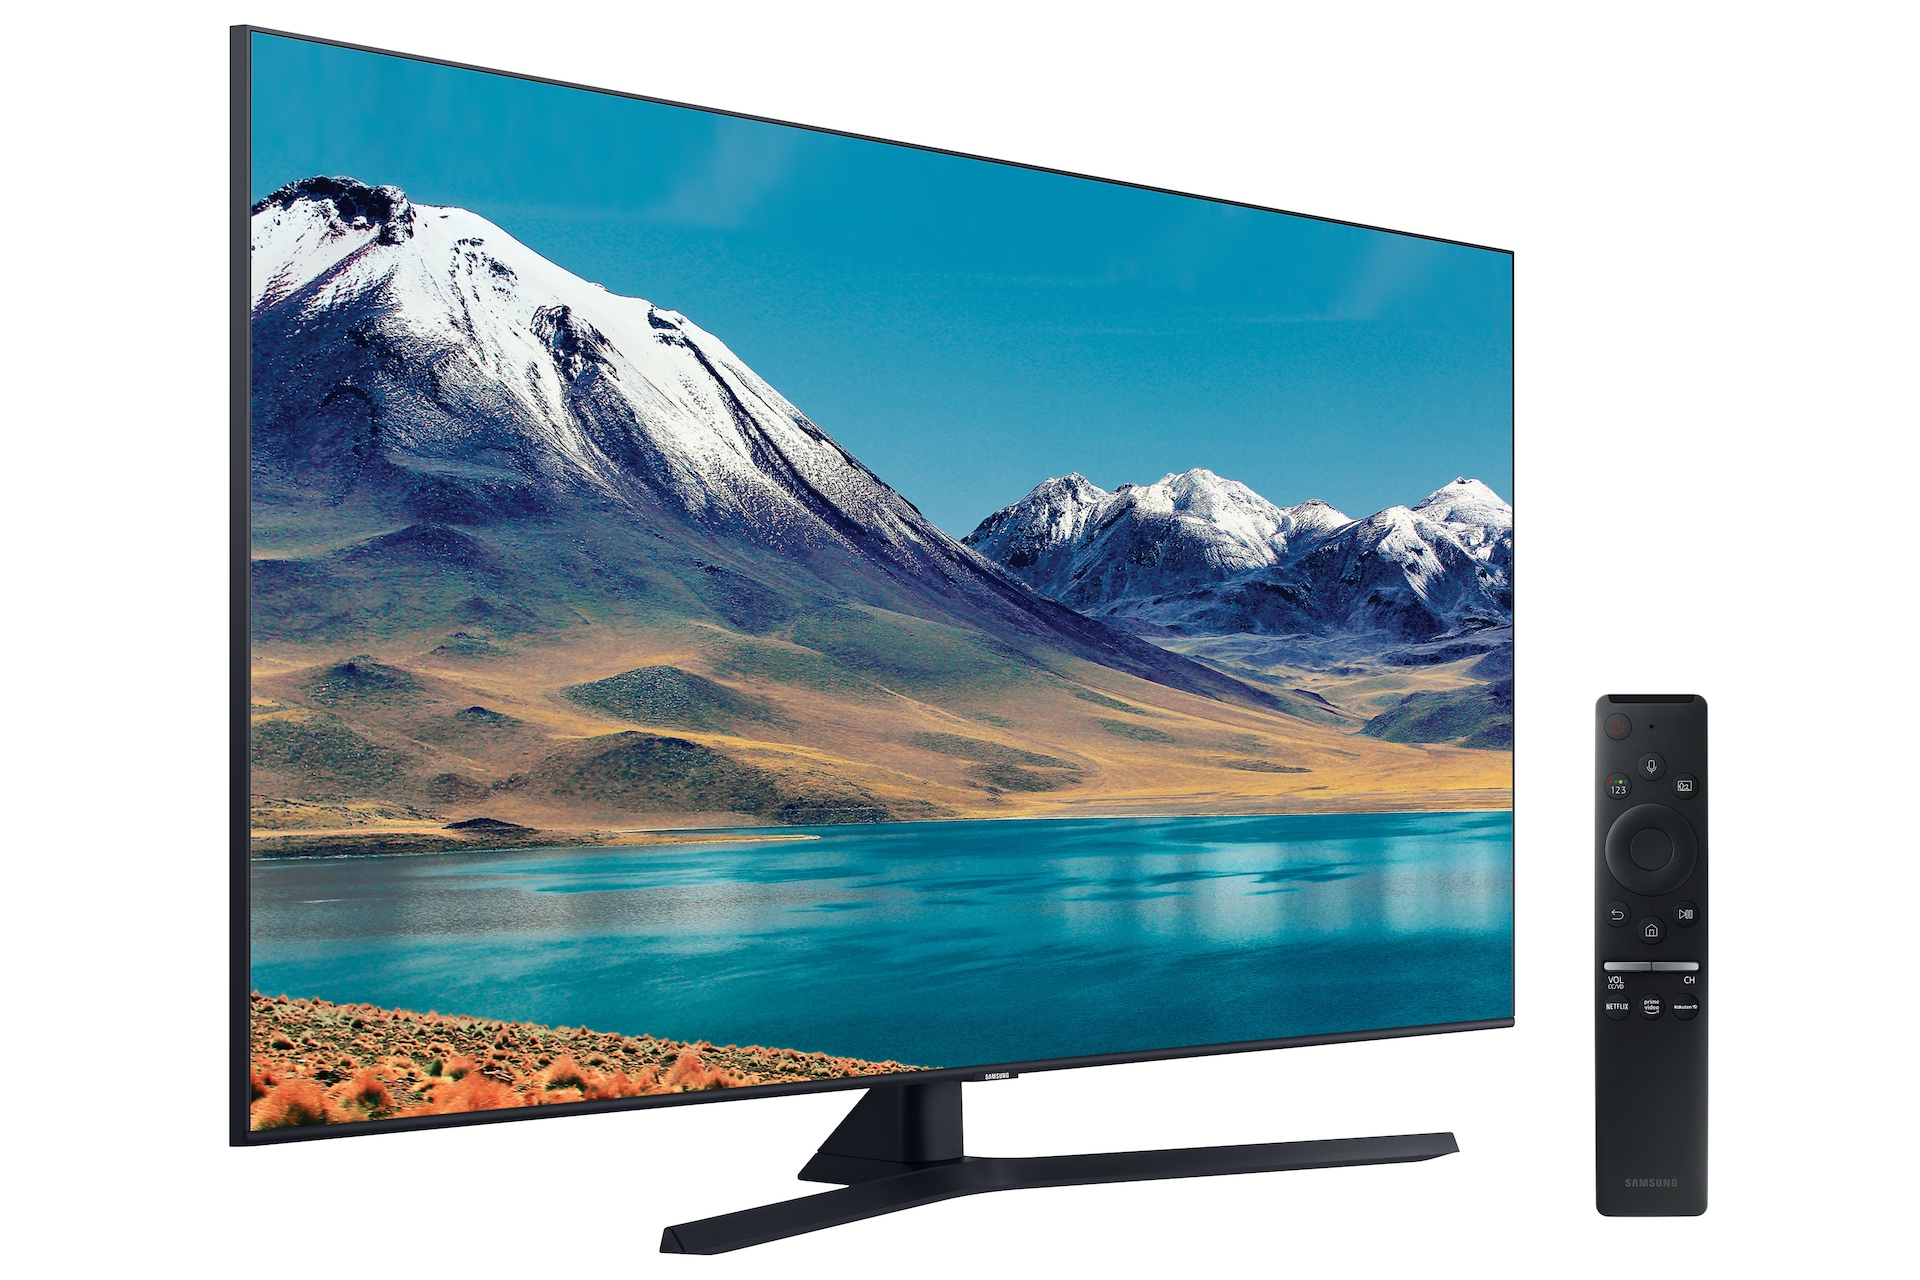 Pantalla Samsung 55 Pulgadas LED 4K Smart TV a precio de socio